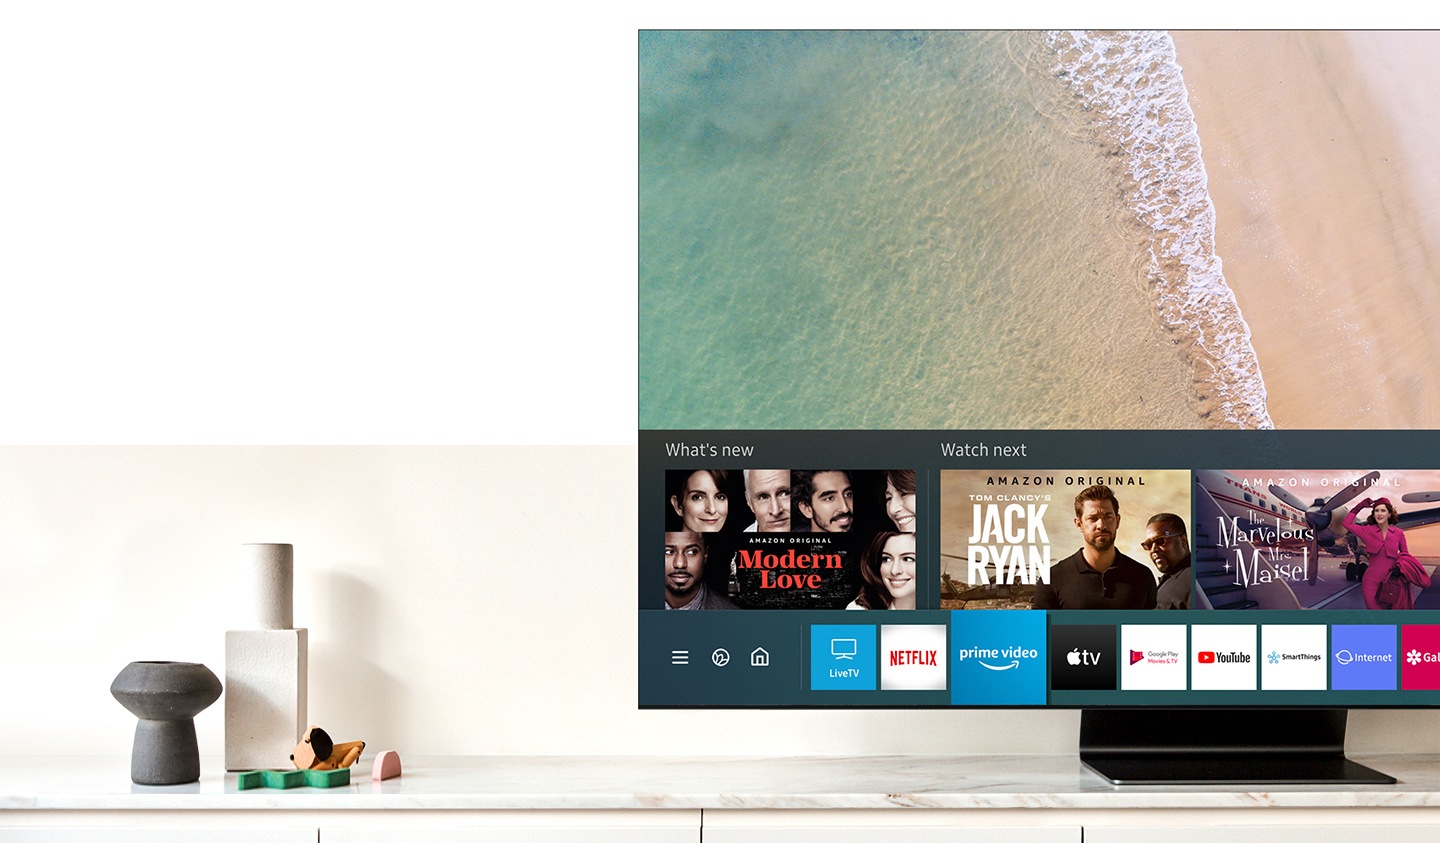 Samsung QLED TV is showing Smart Hub, Samsung Smart TV platform, on the screen. Smart TV powered by Tizen logo is under the TV.